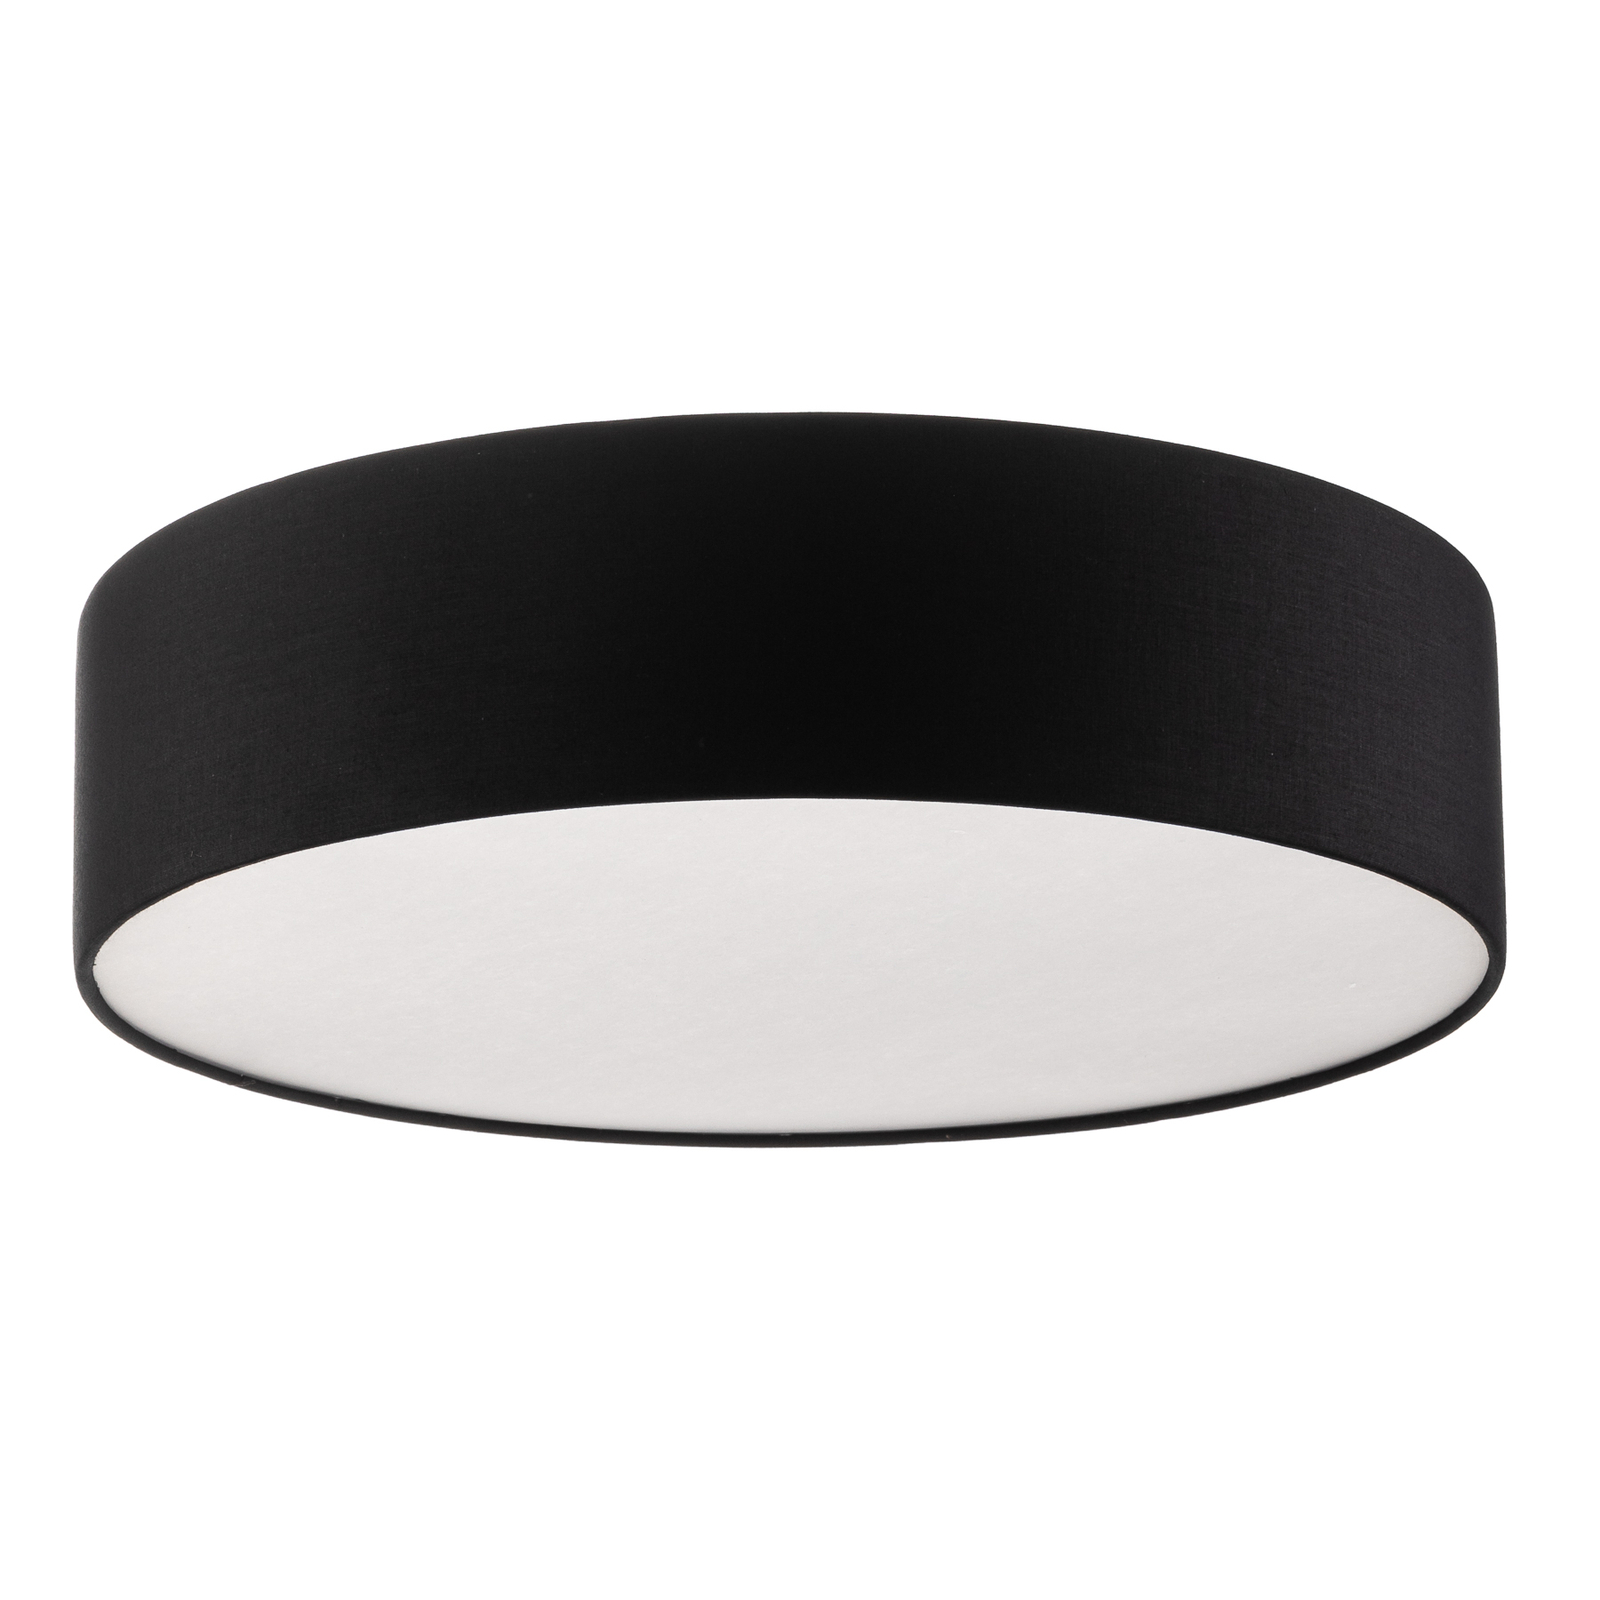 Rondo ceiling light, black, Ø 50 cm